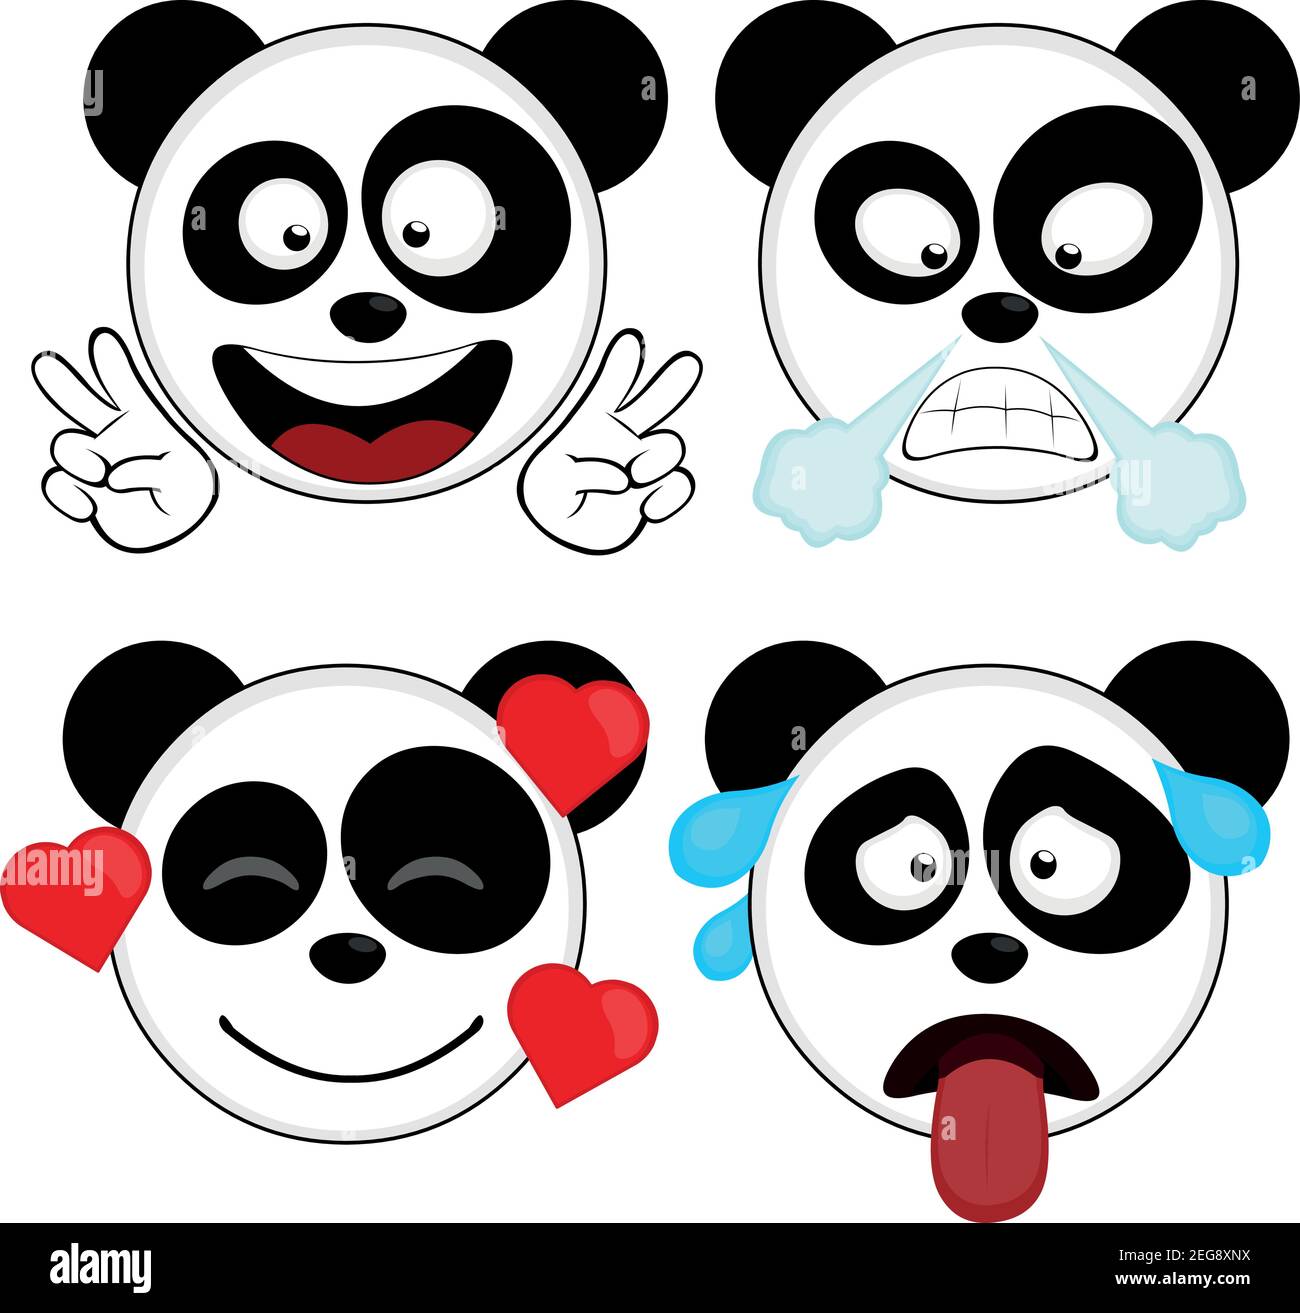 Vector illustration of expressions of a panda bear cartoon Stock Vector